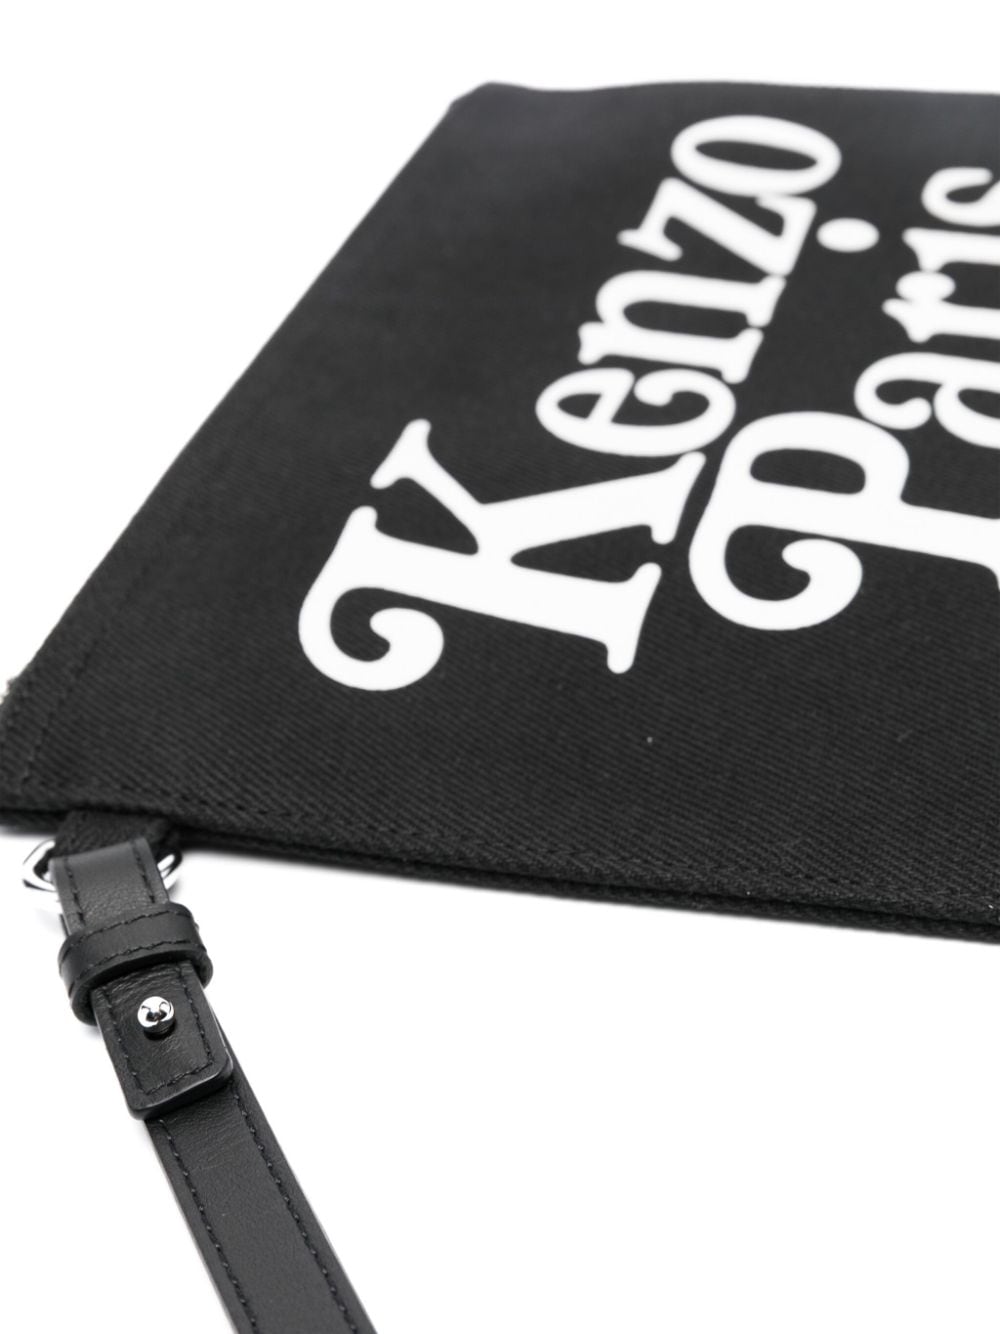 Black Utility logo-print pouch<BR/><BR/><BR/><BR/><BR/><BR/><BR/>